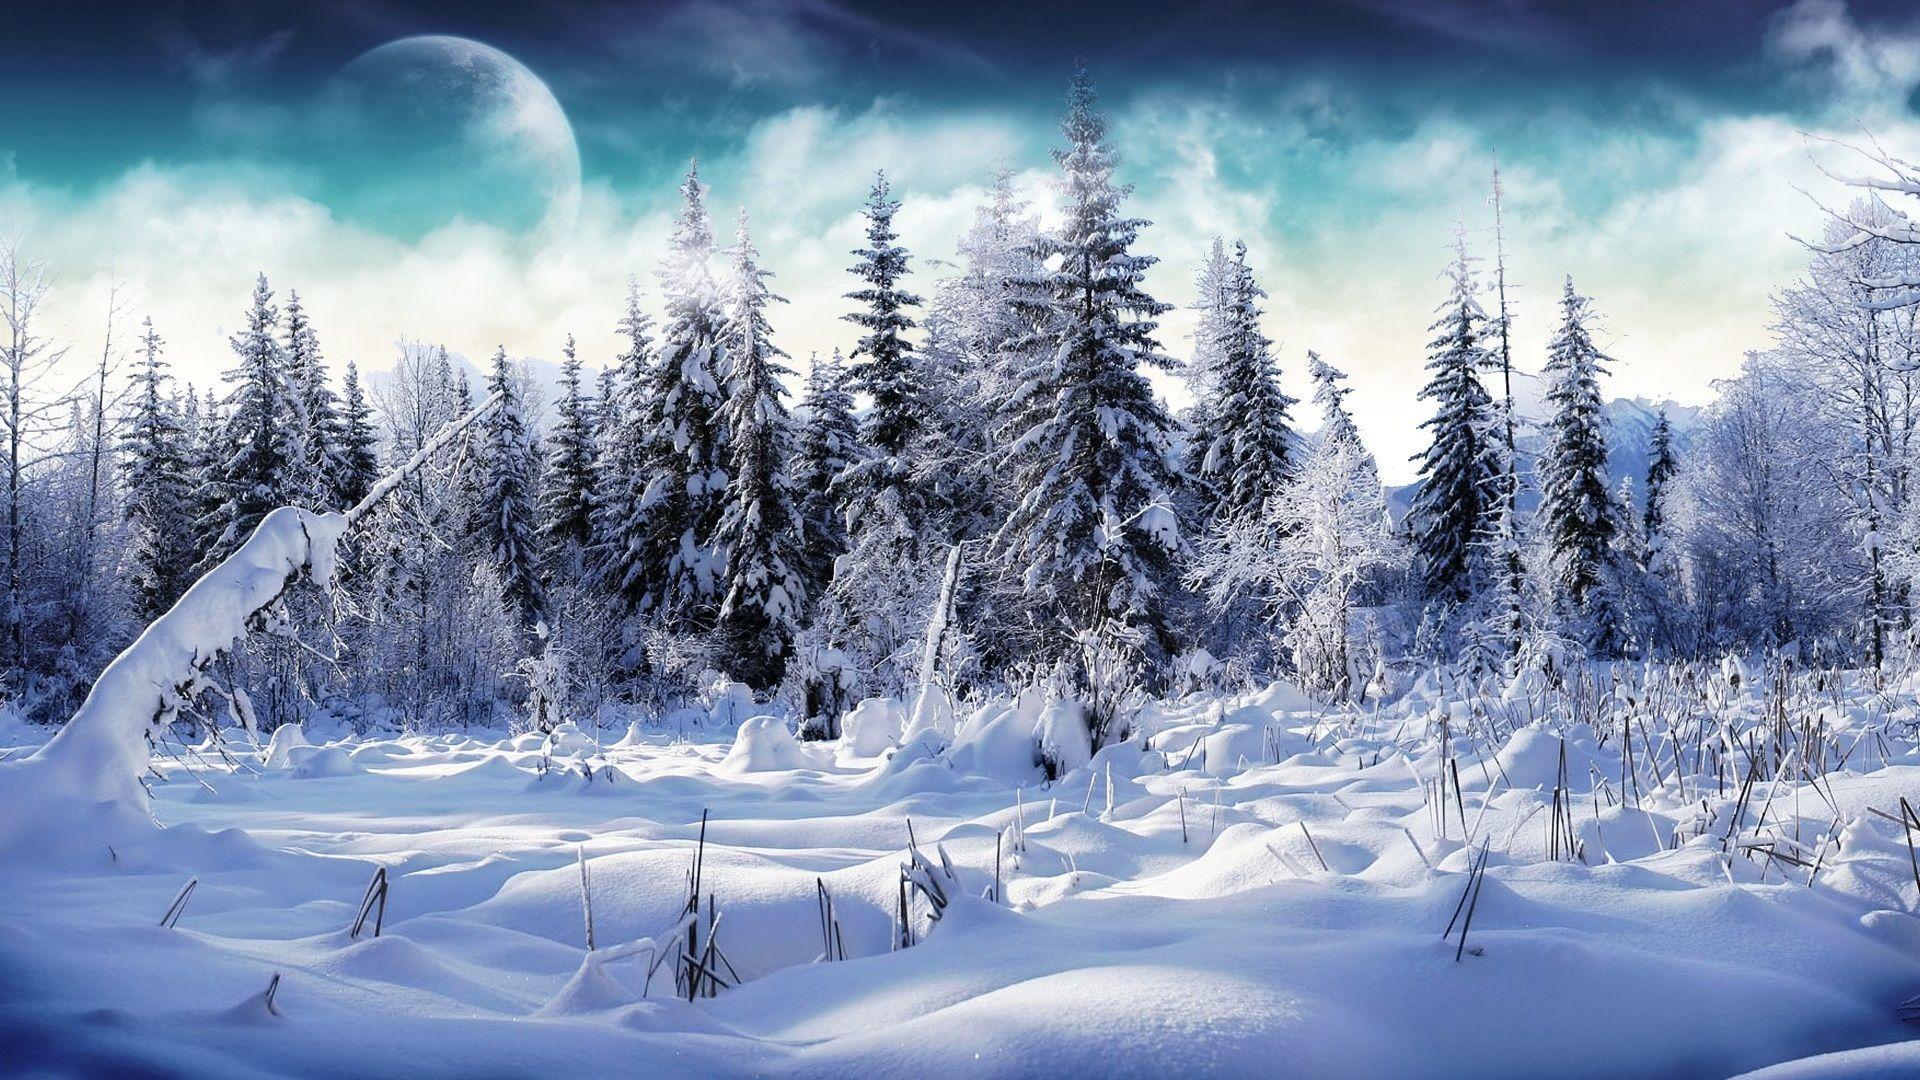 1080P Snow Wallpaper Free 1080P Snow Background